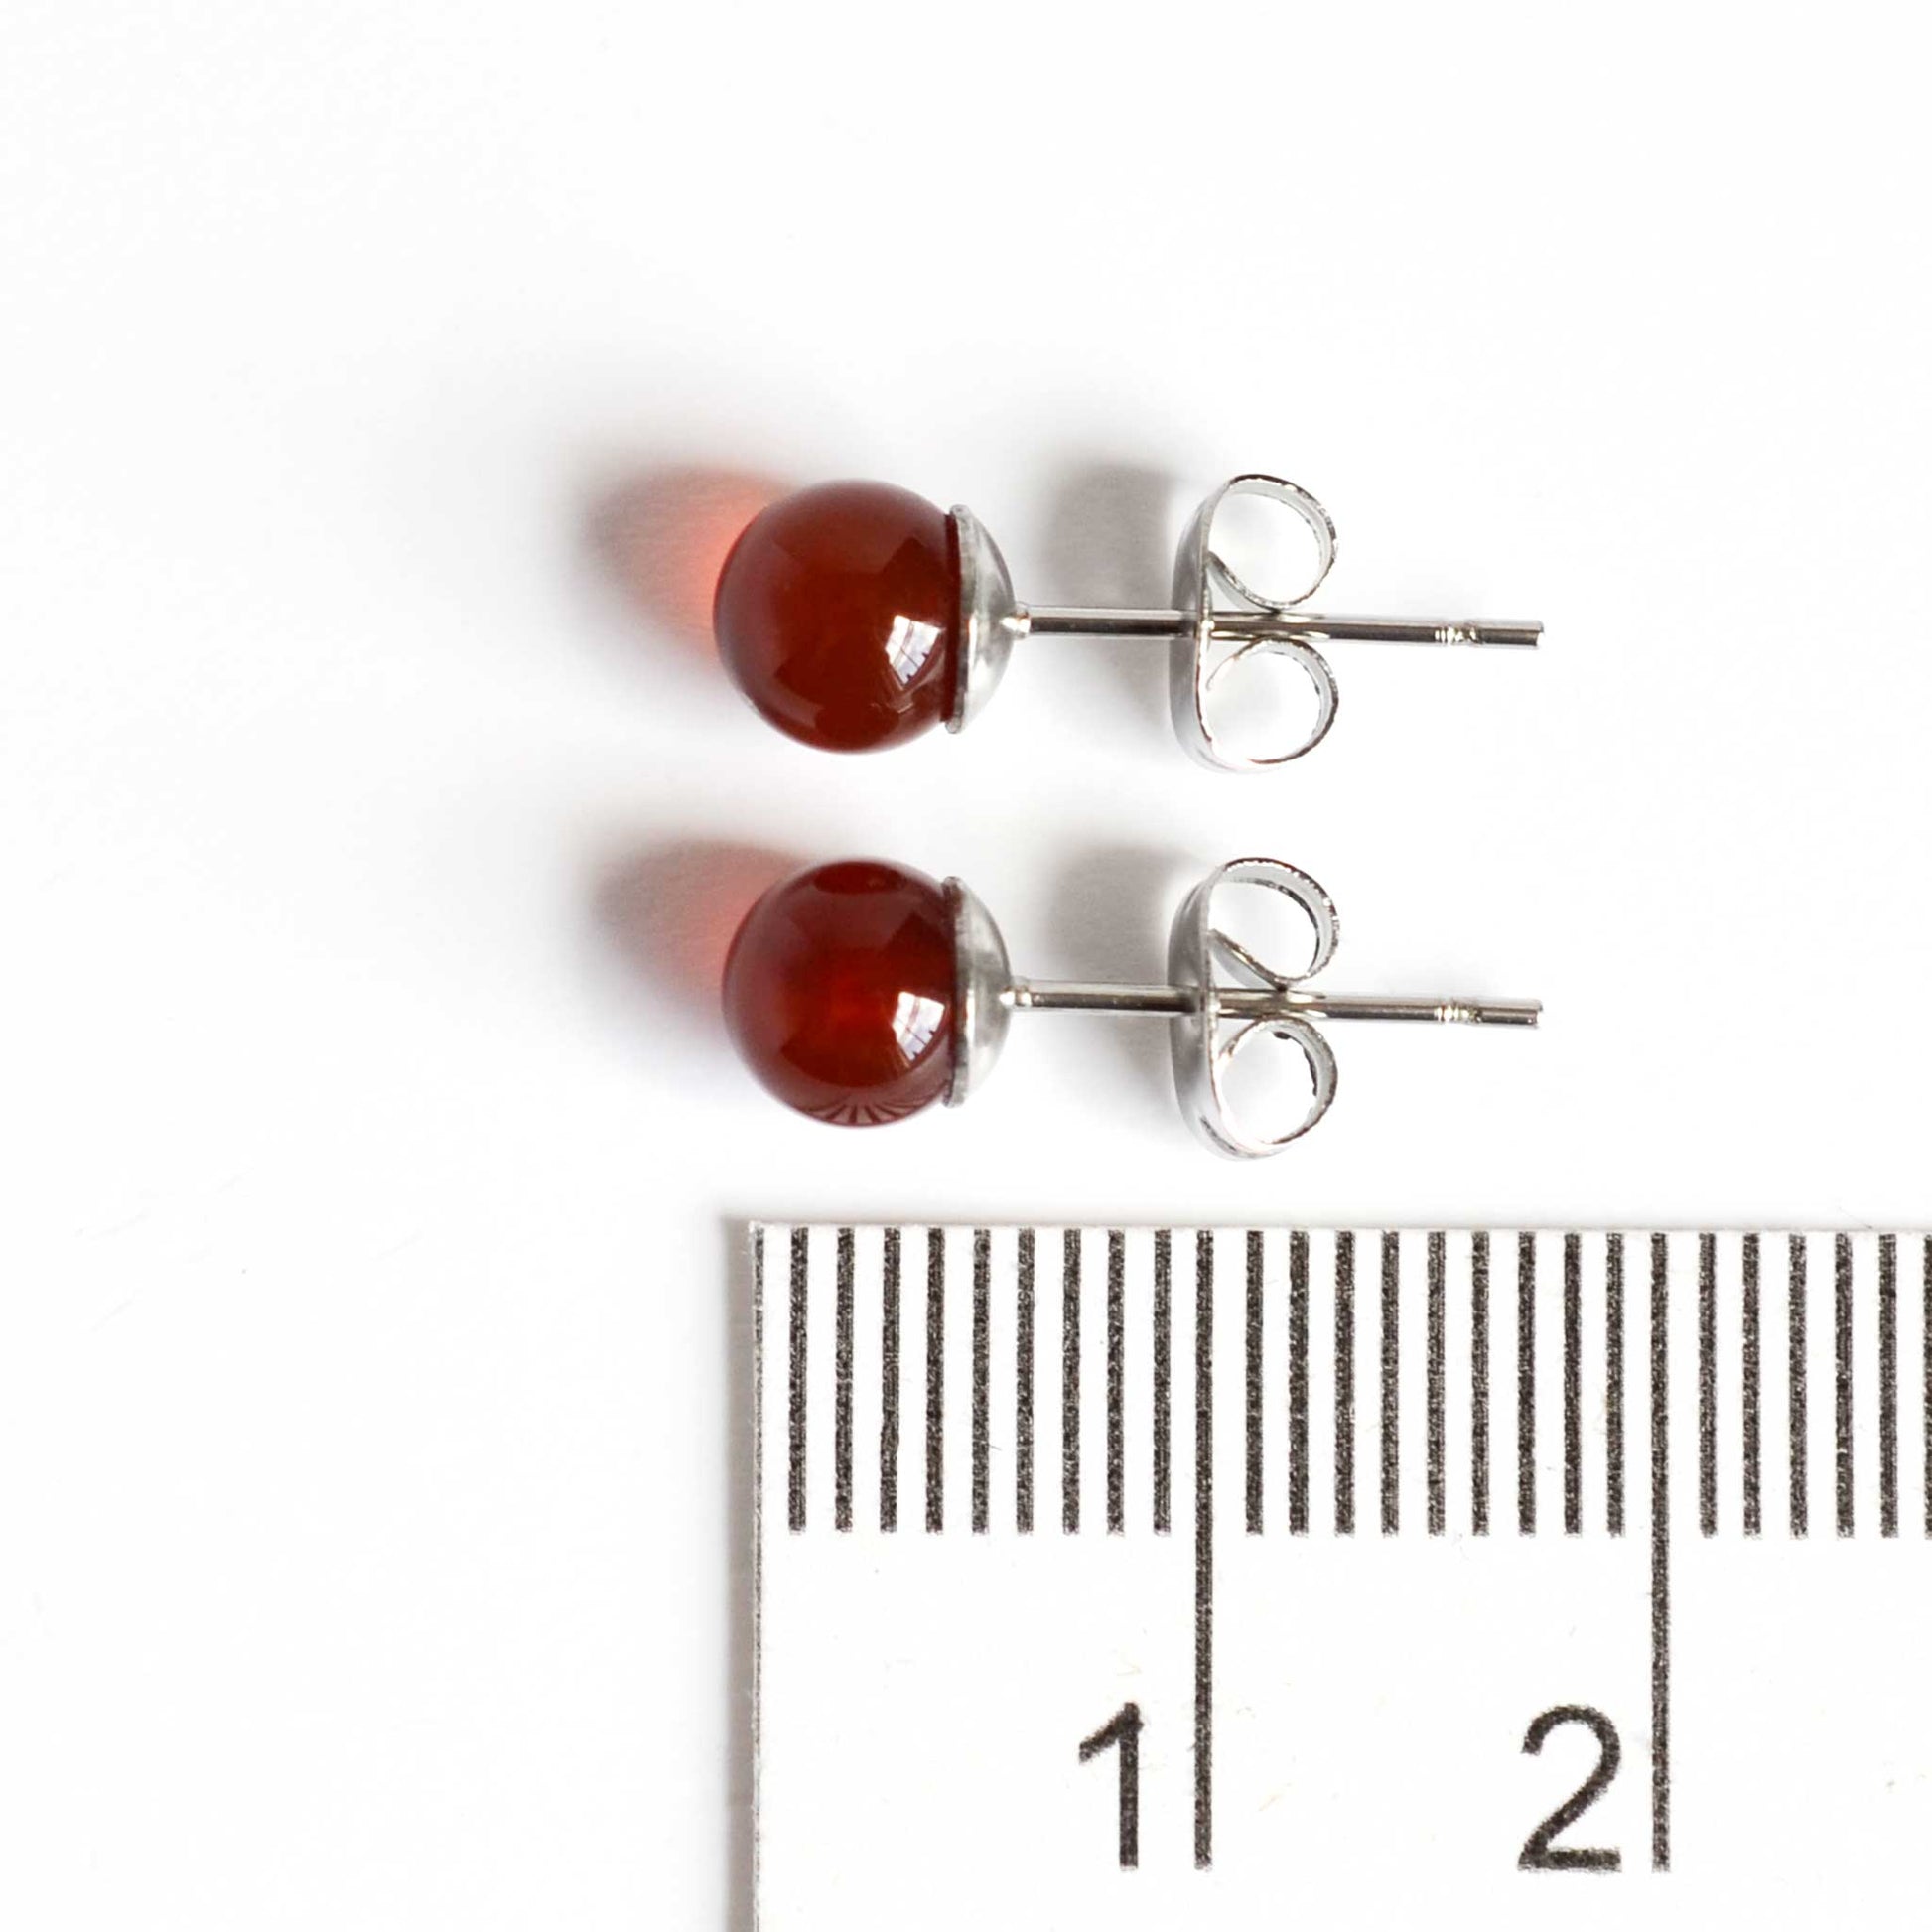 6mm Carnelian ball stud earrings next to ruler